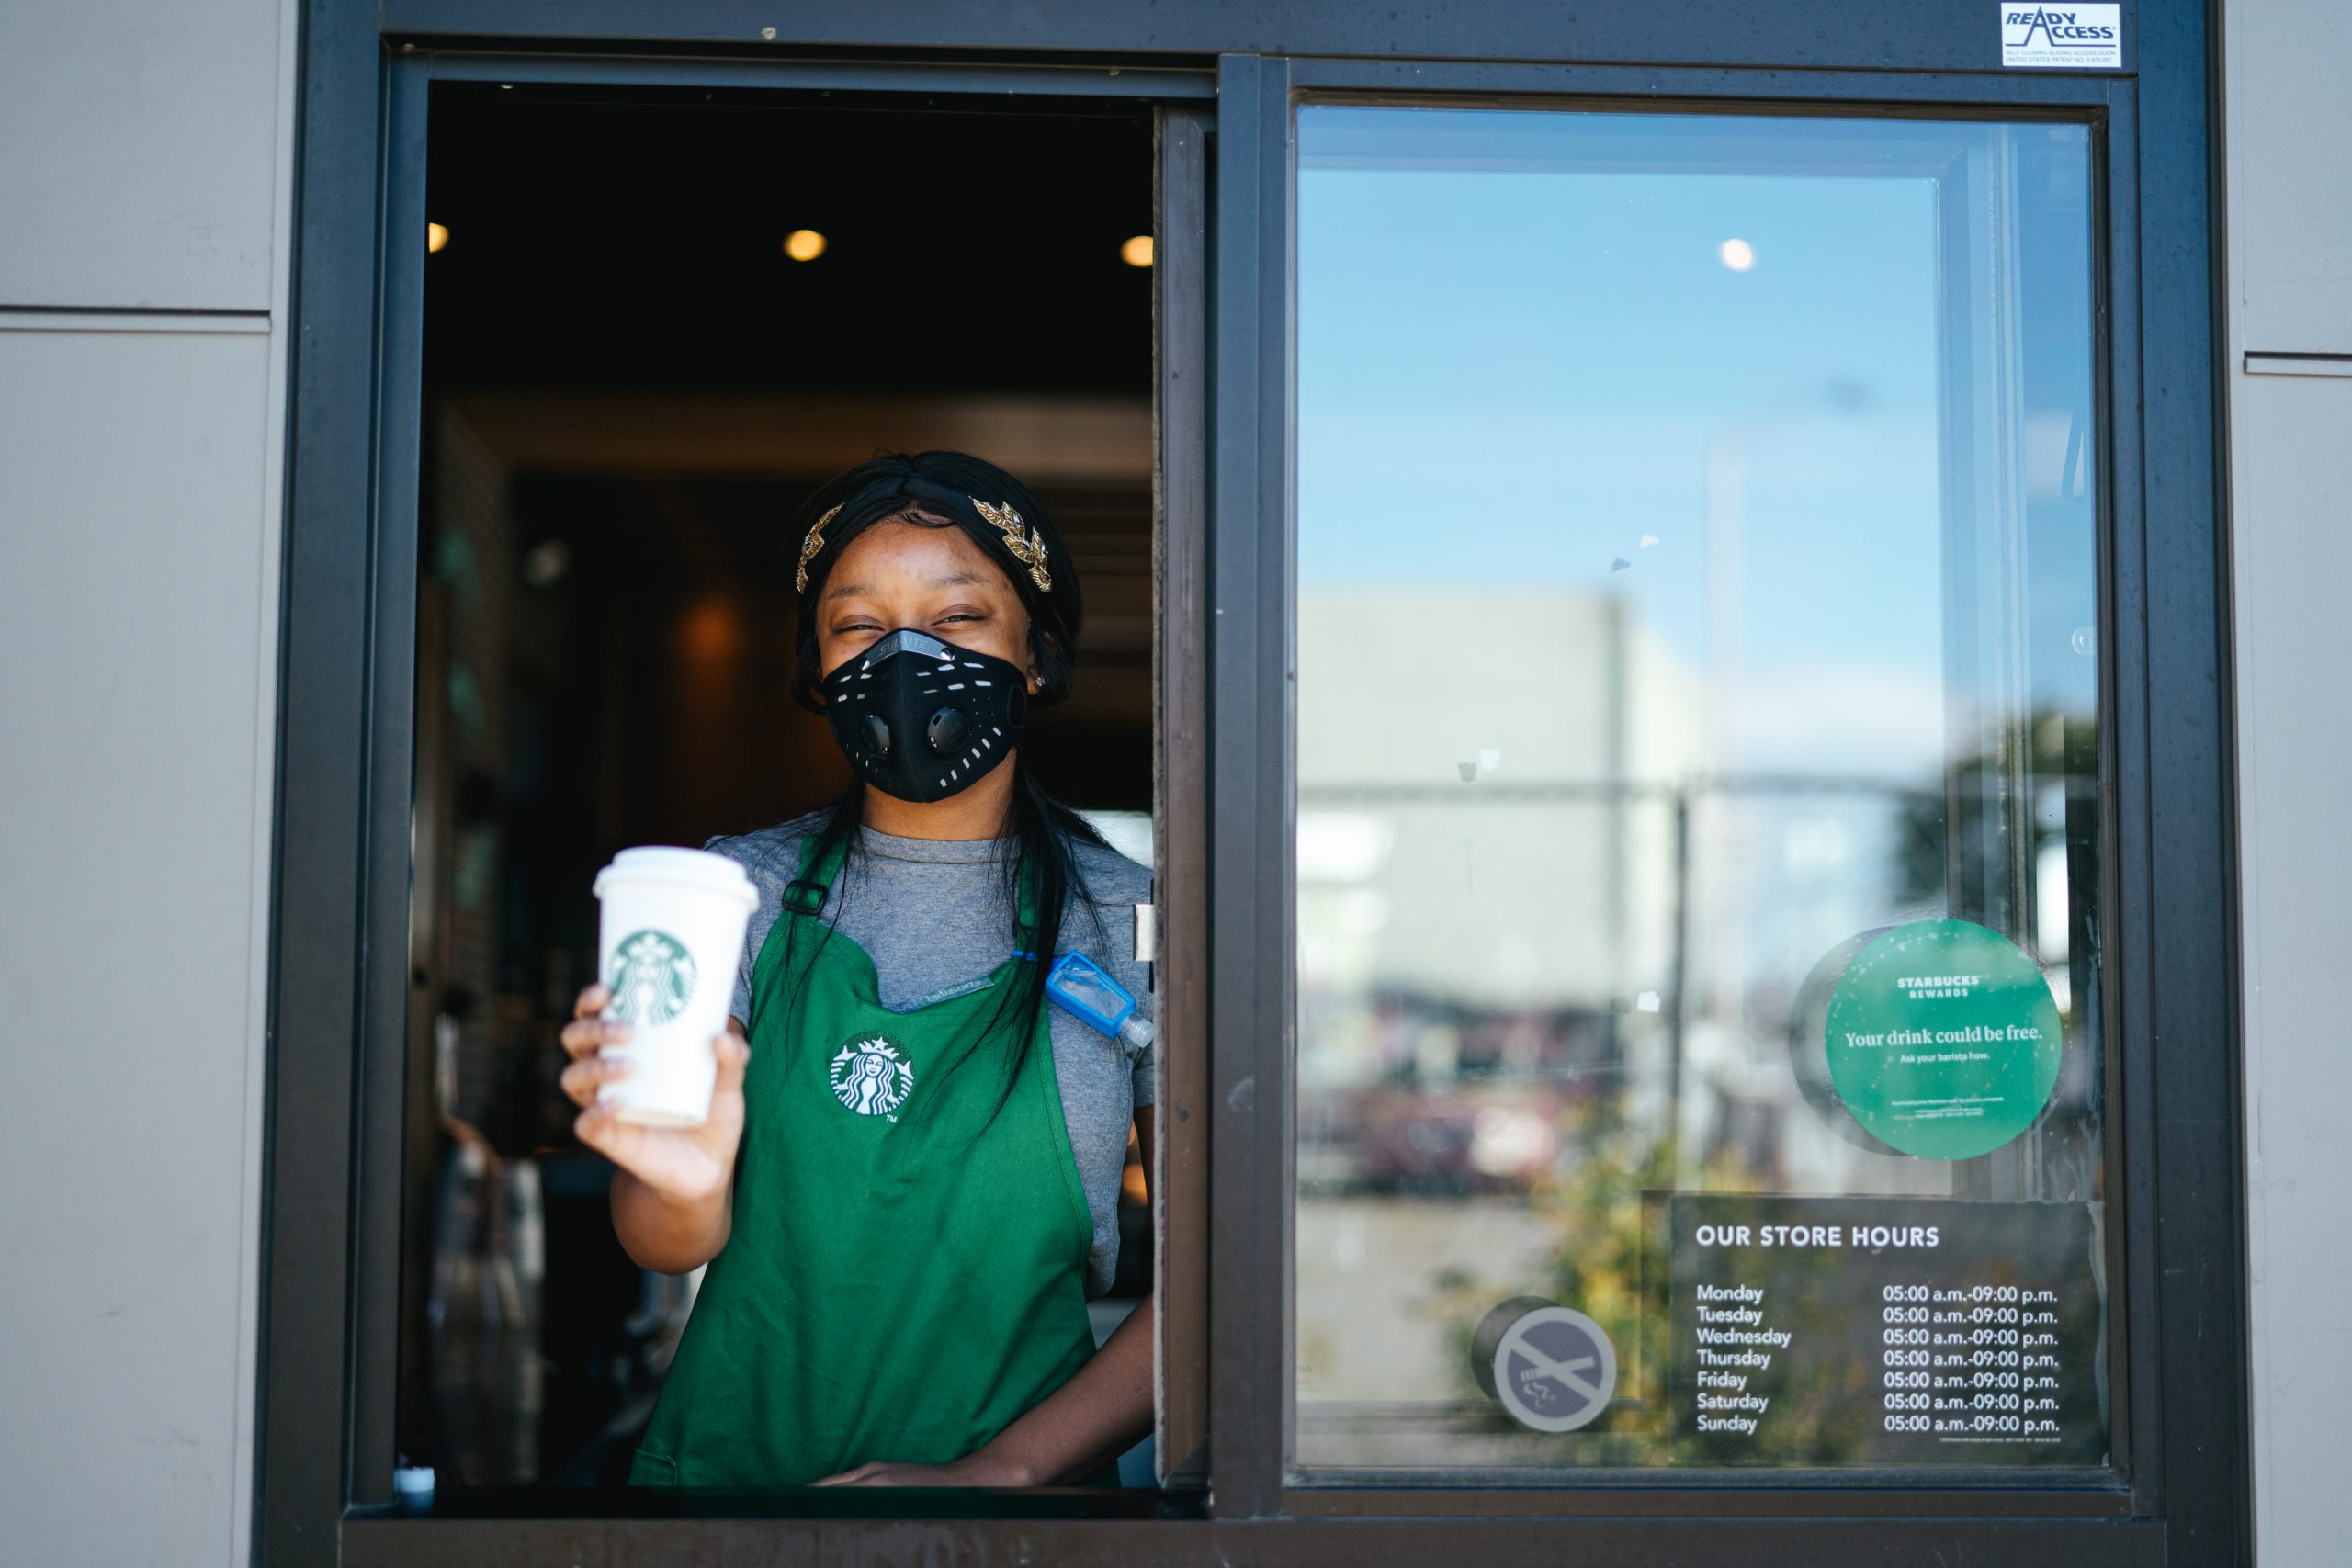 Starbucks/SPH partnership tracks COVID policy